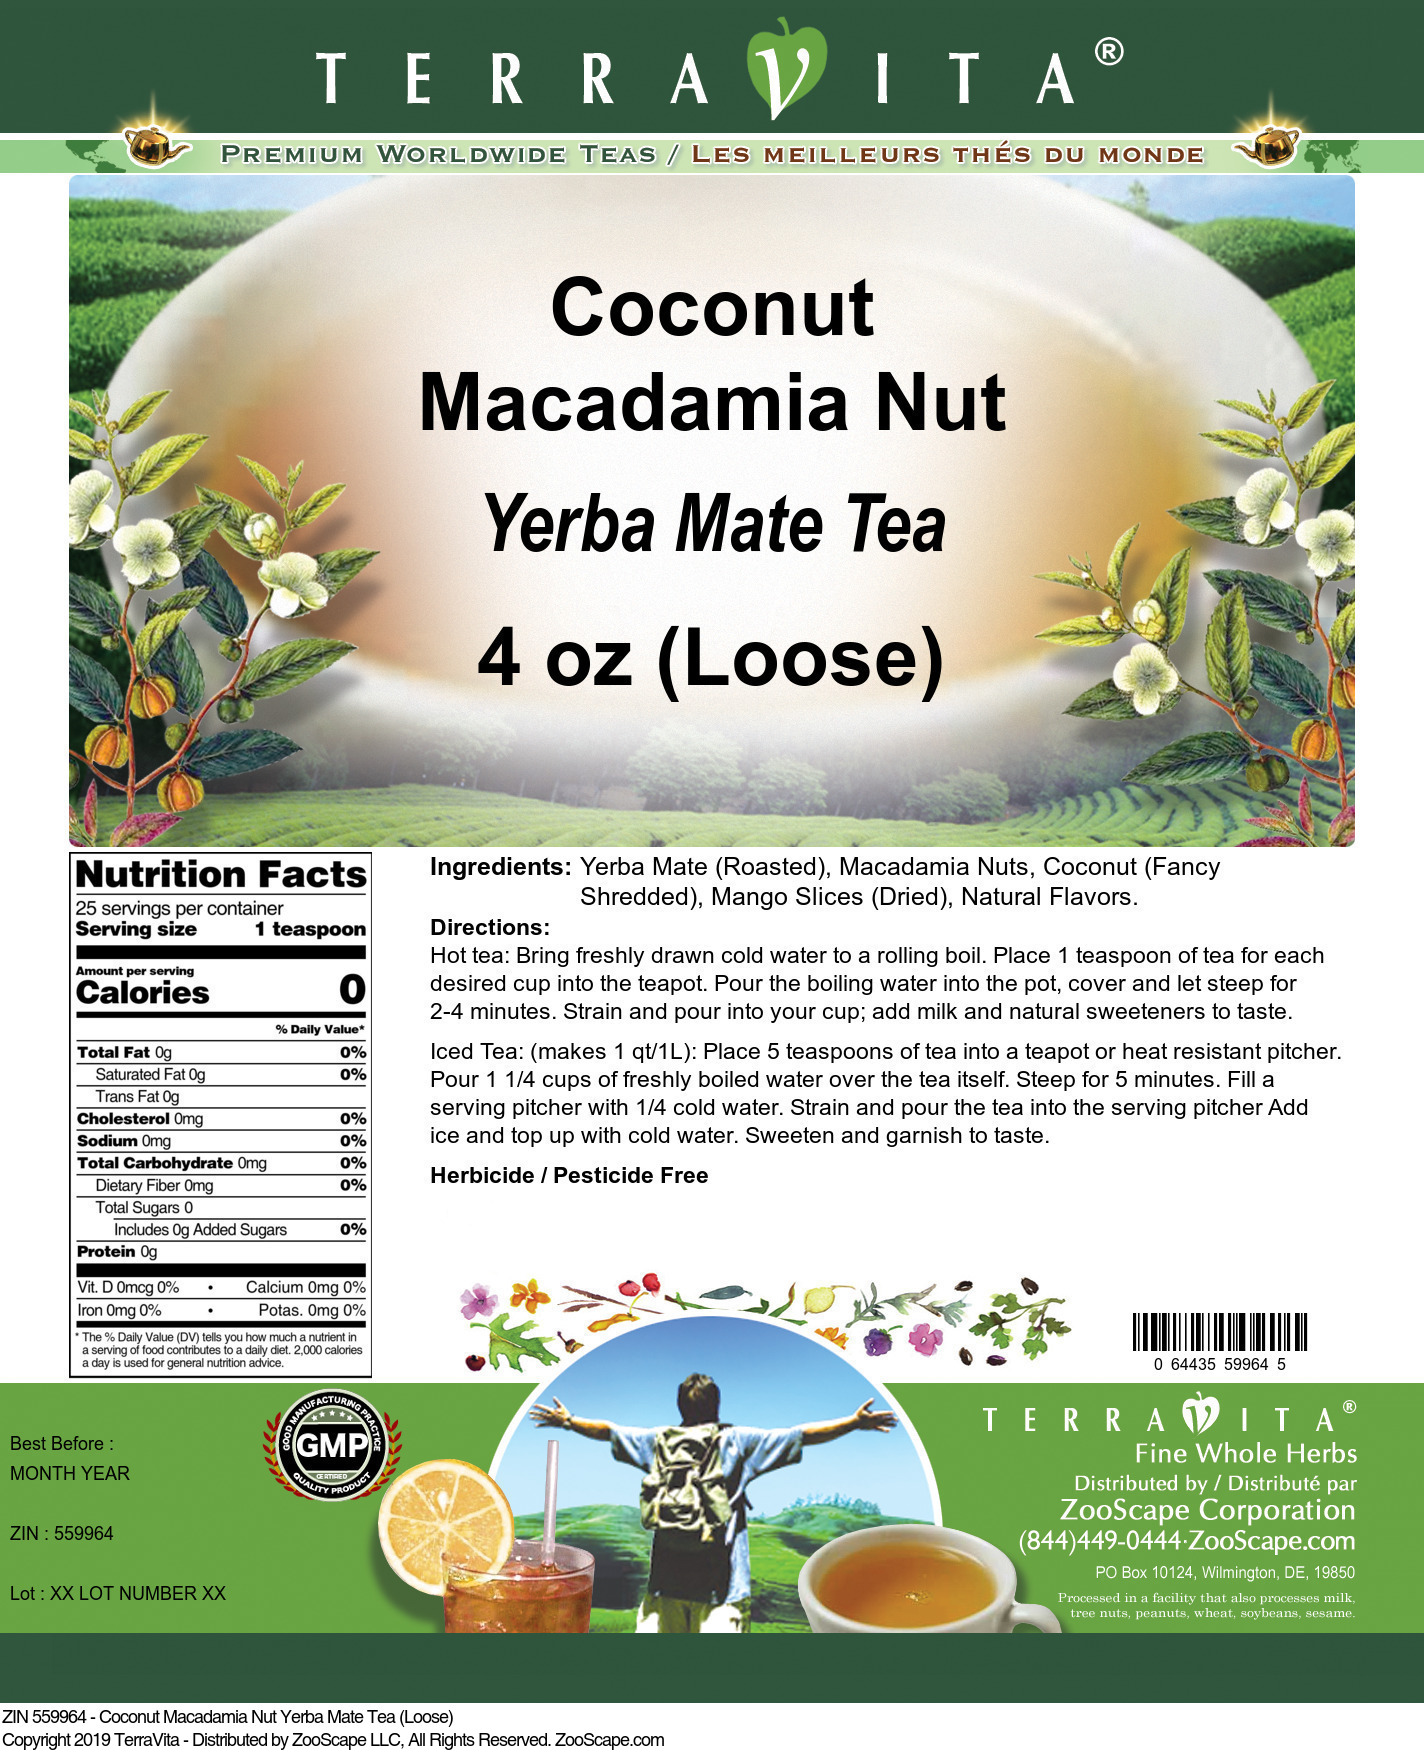 Coconut Macadamia Nut Yerba Mate Tea (Loose) - Label